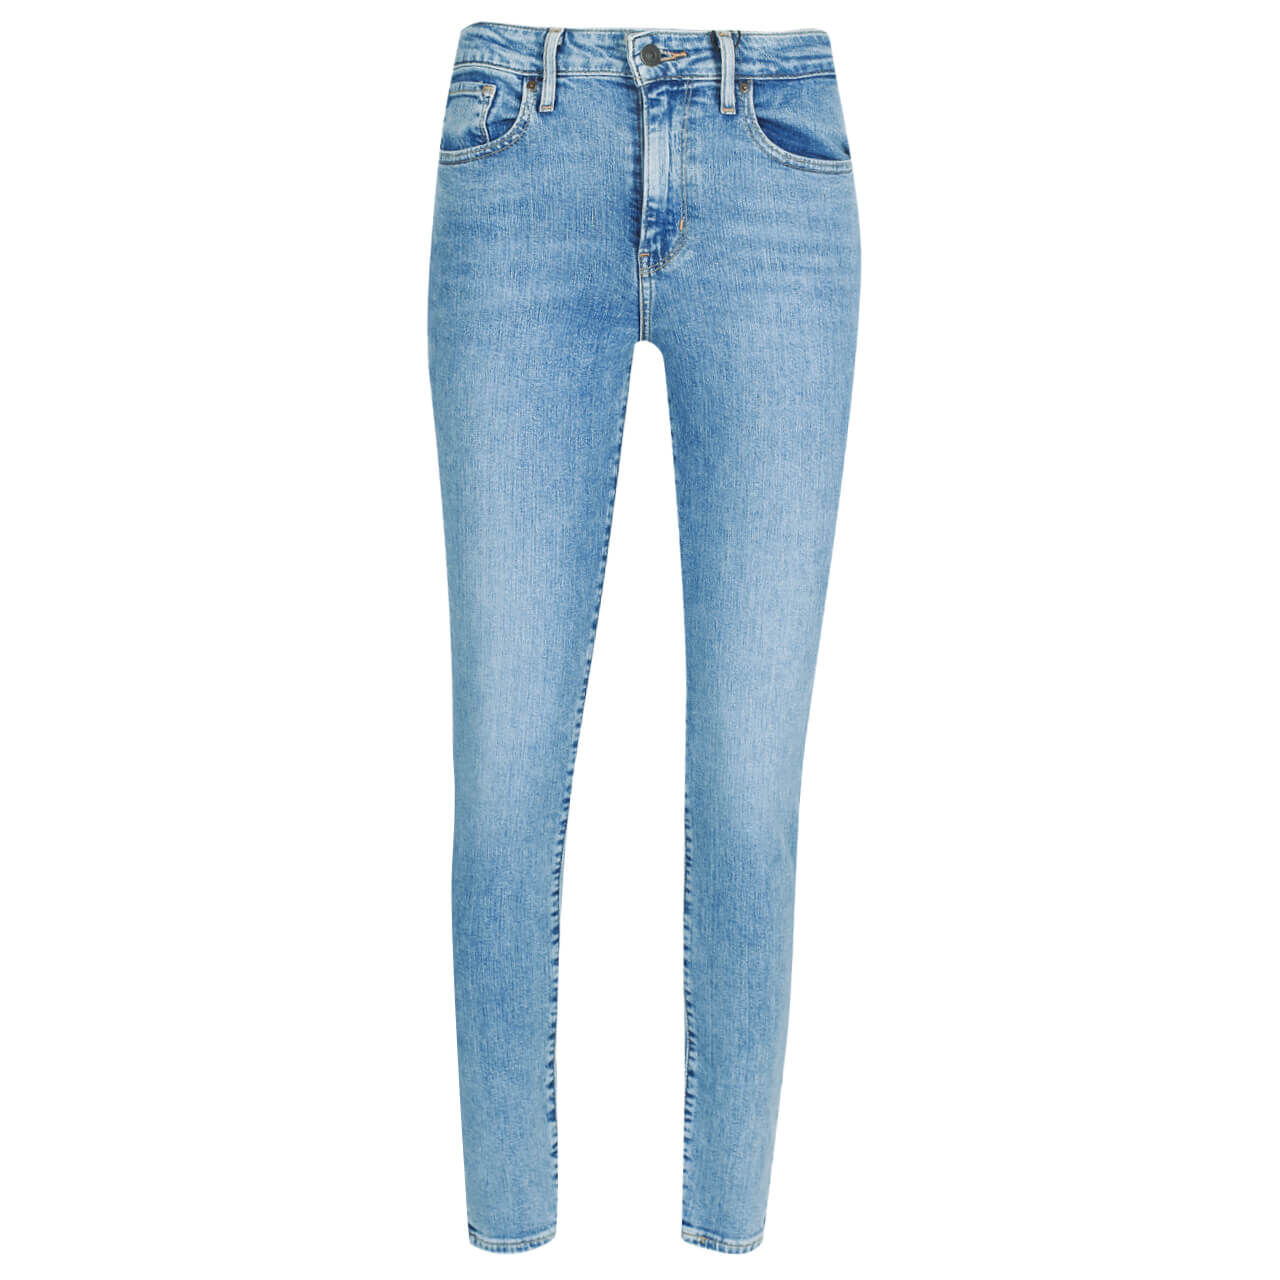 Levis Jeans 721 Skinny für Damen in Hellblau, FarbNr.: 0468